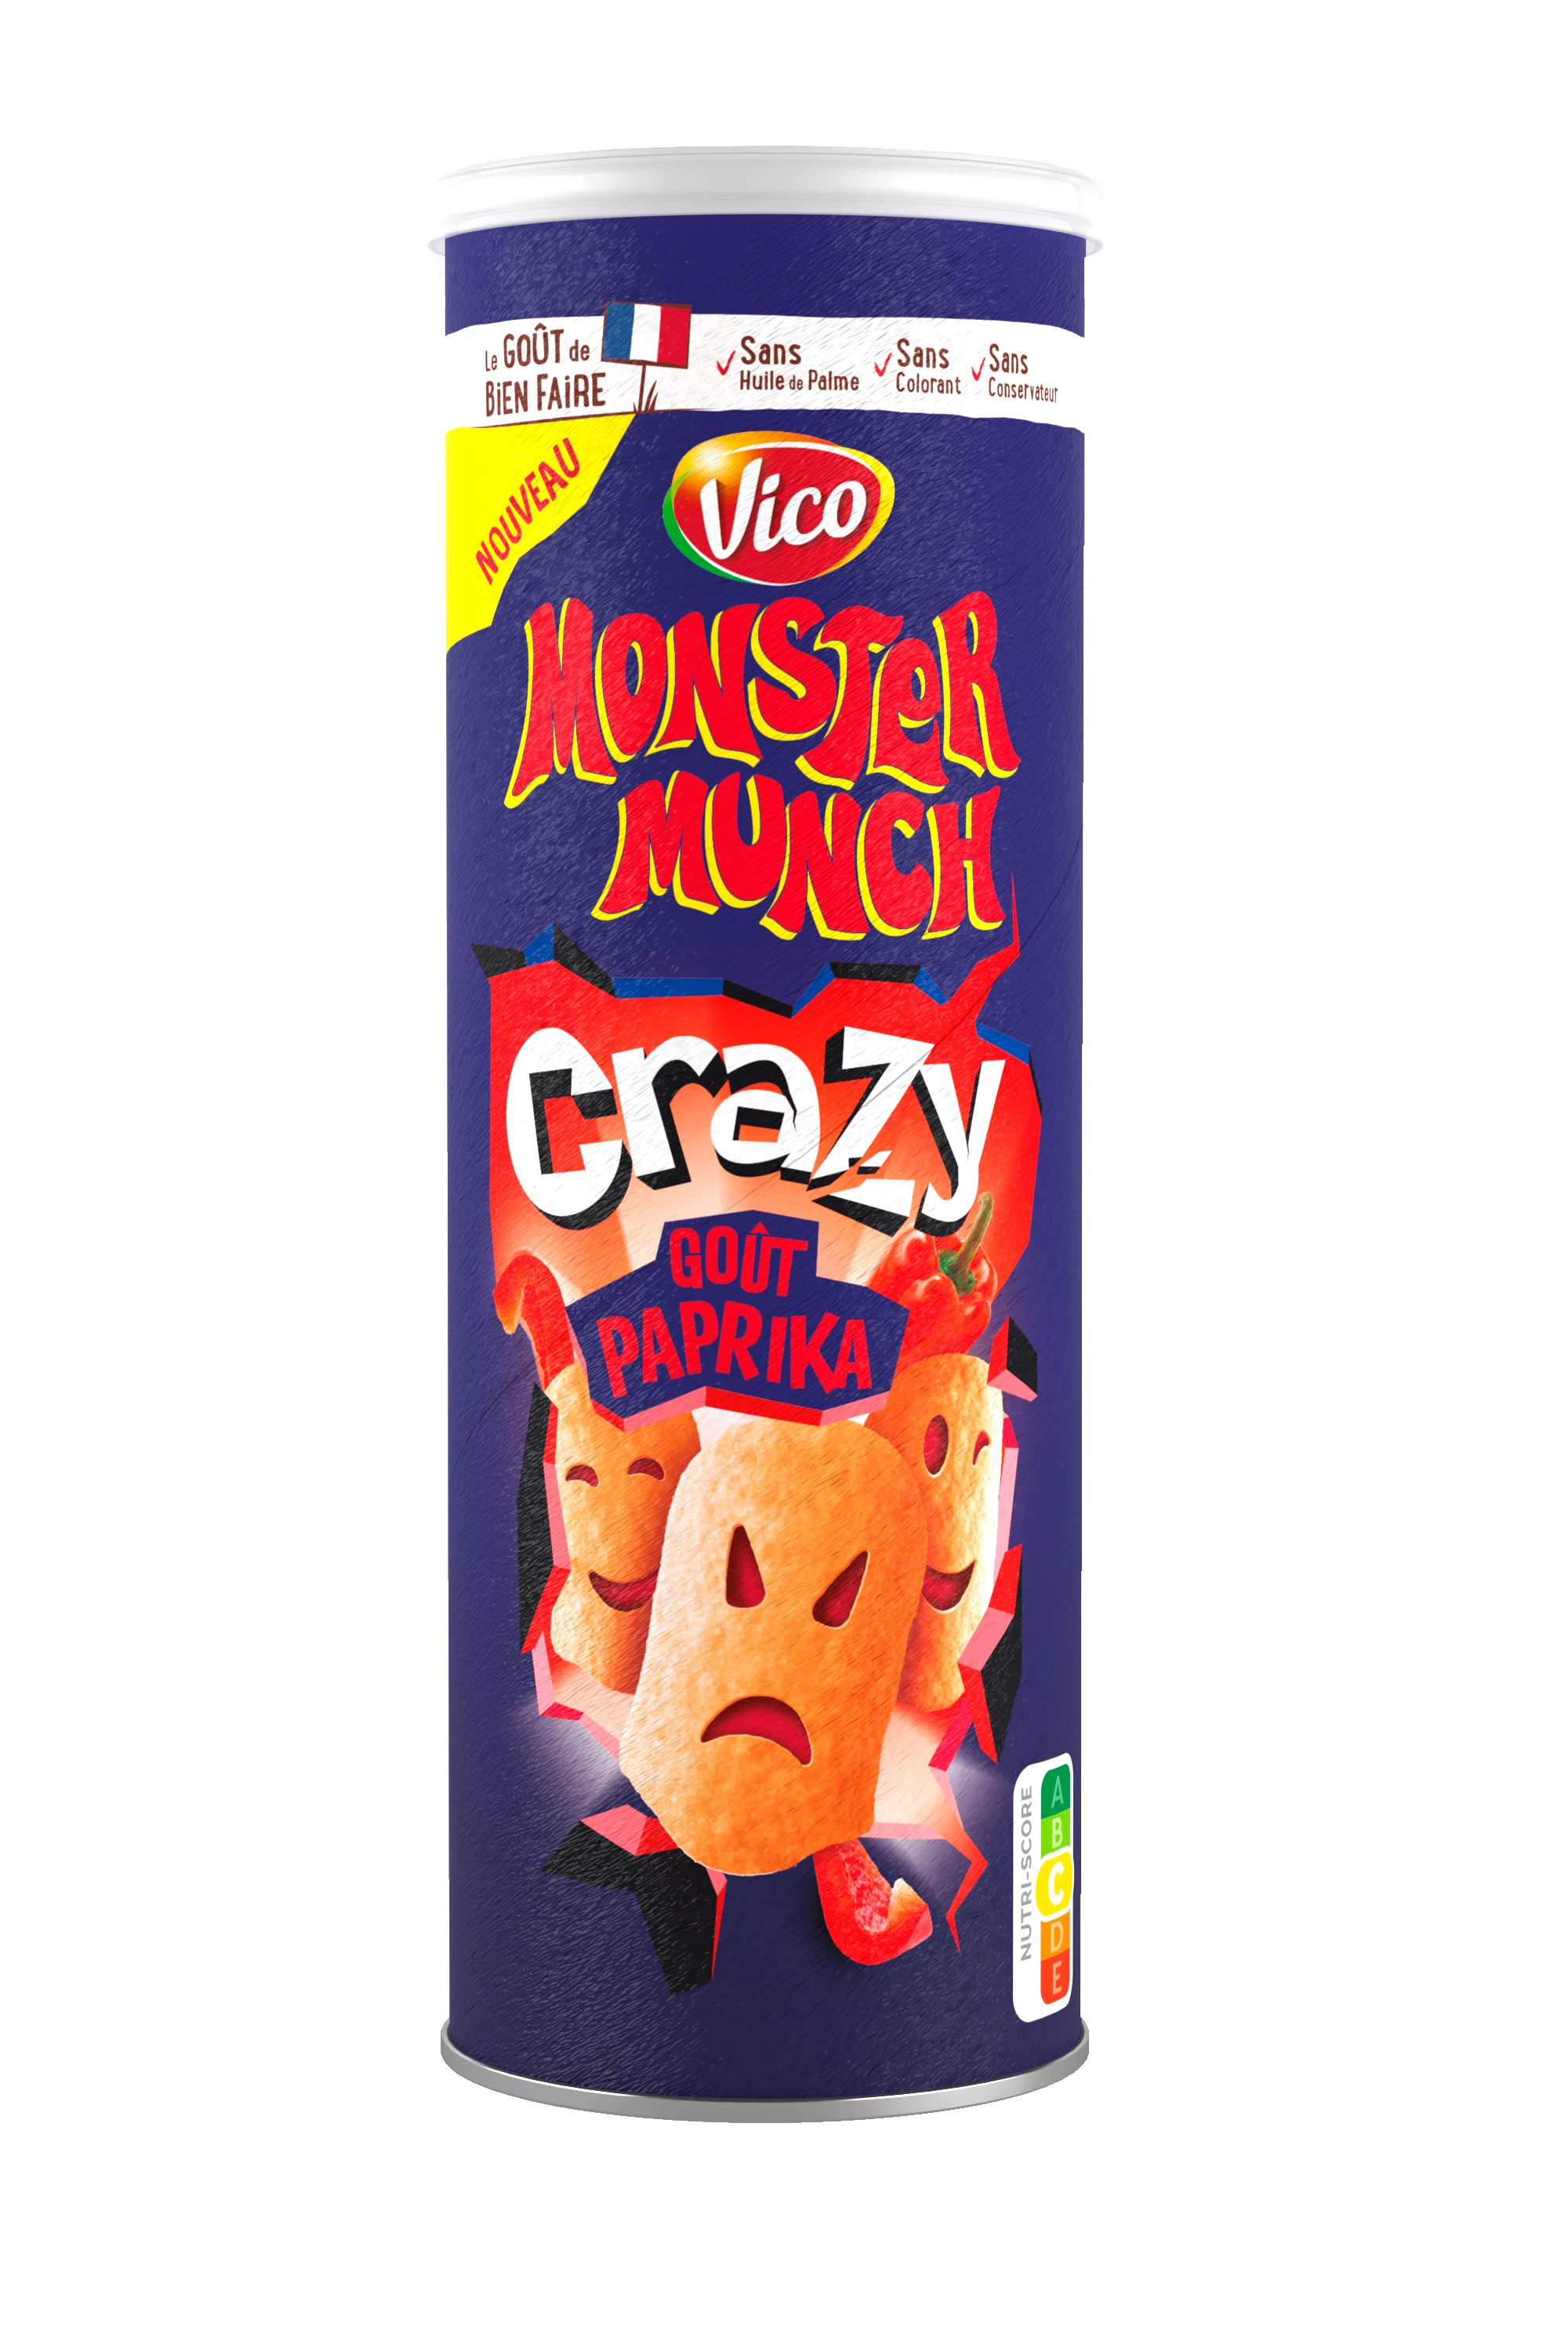 MONSTER MUNCH CRAZY Chips Paprika Flavor Tiles, 150g - VICO